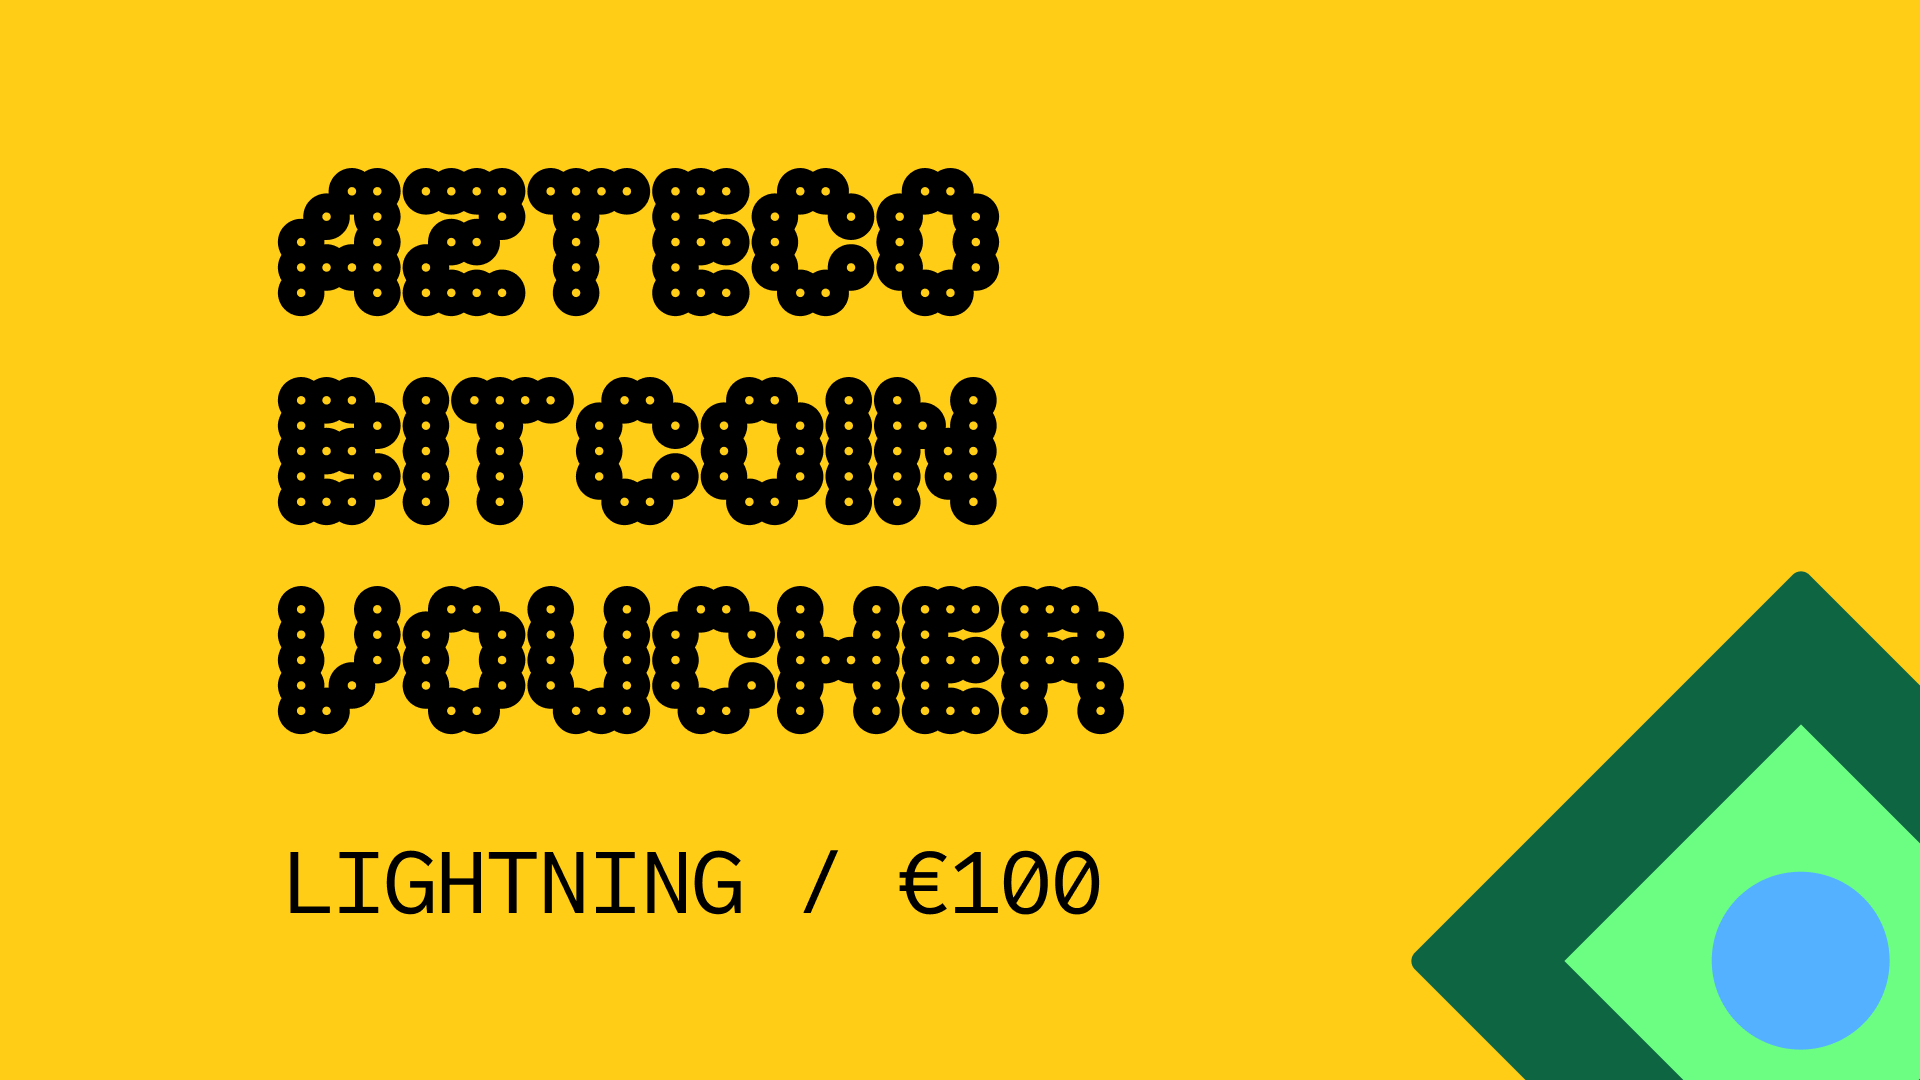 Azteco Bitcoin Lighting €100 Voucher, 112.98$